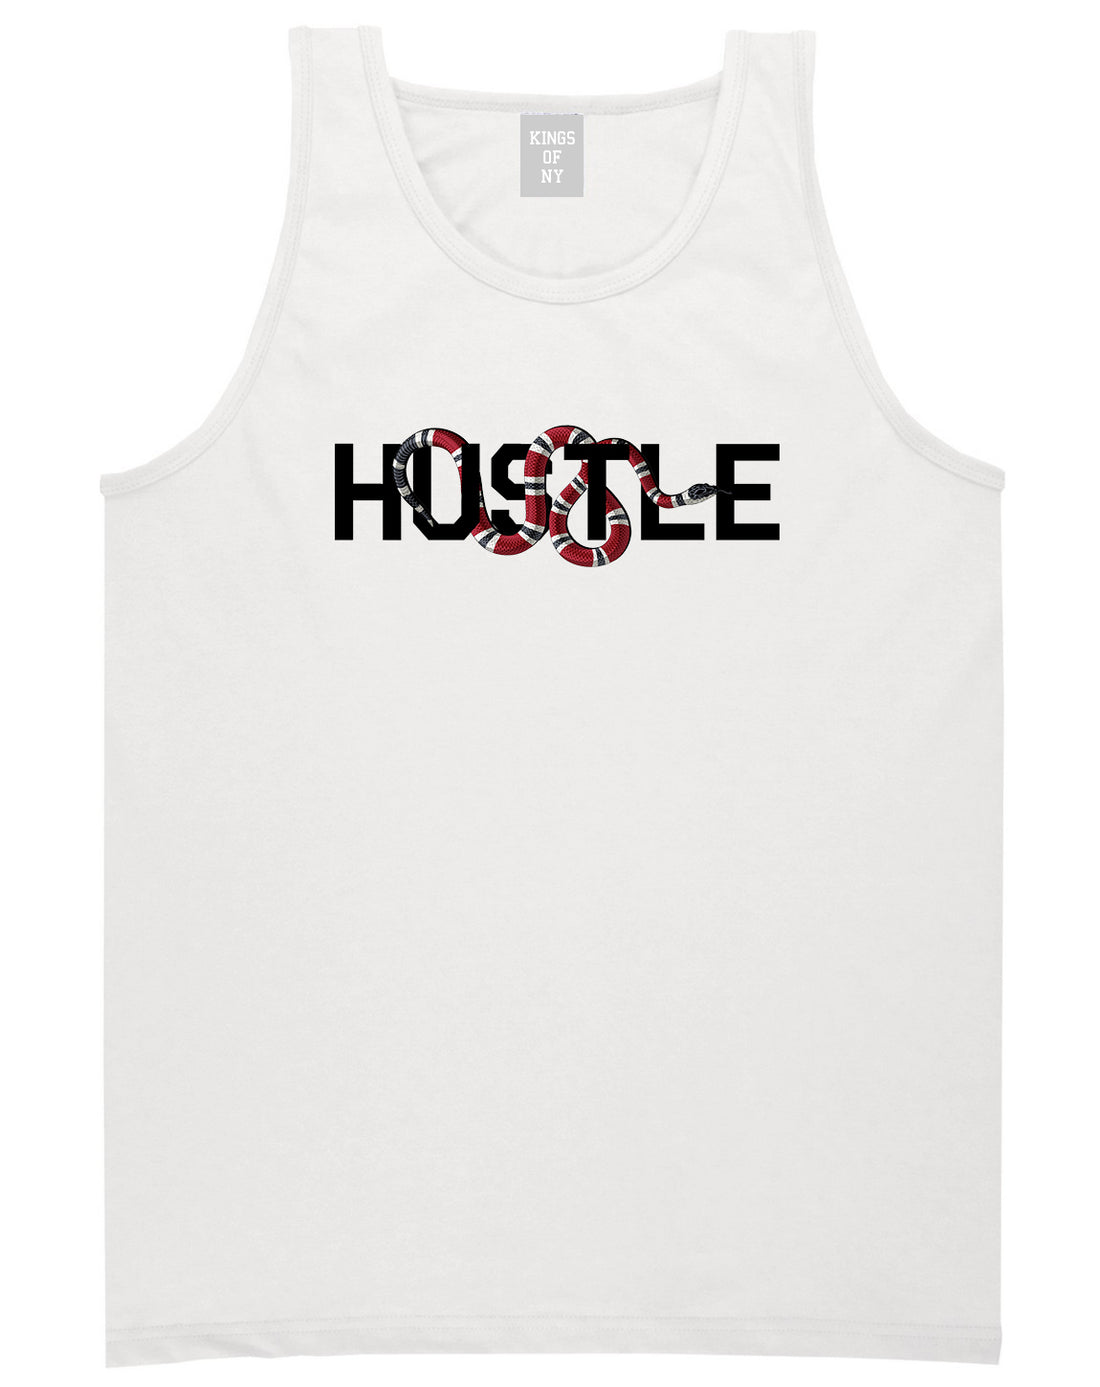 Hustle Snake Mens Tank Top Shirt White by Kings Of NY